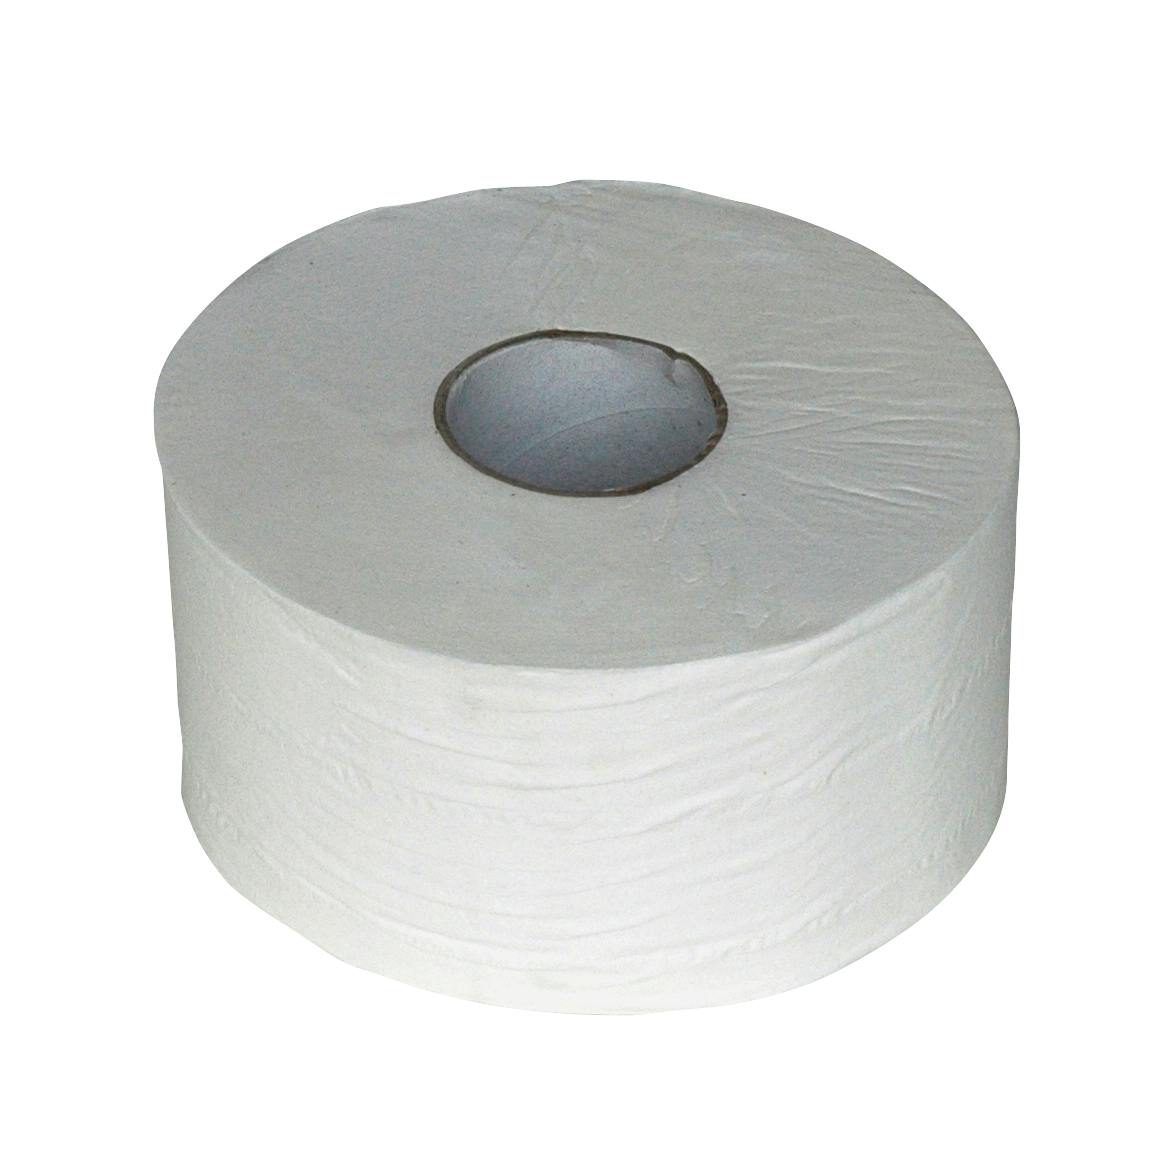 Euro 240018 toiletpapier mini jumbo 2 laags cellulose wit 180 meter 